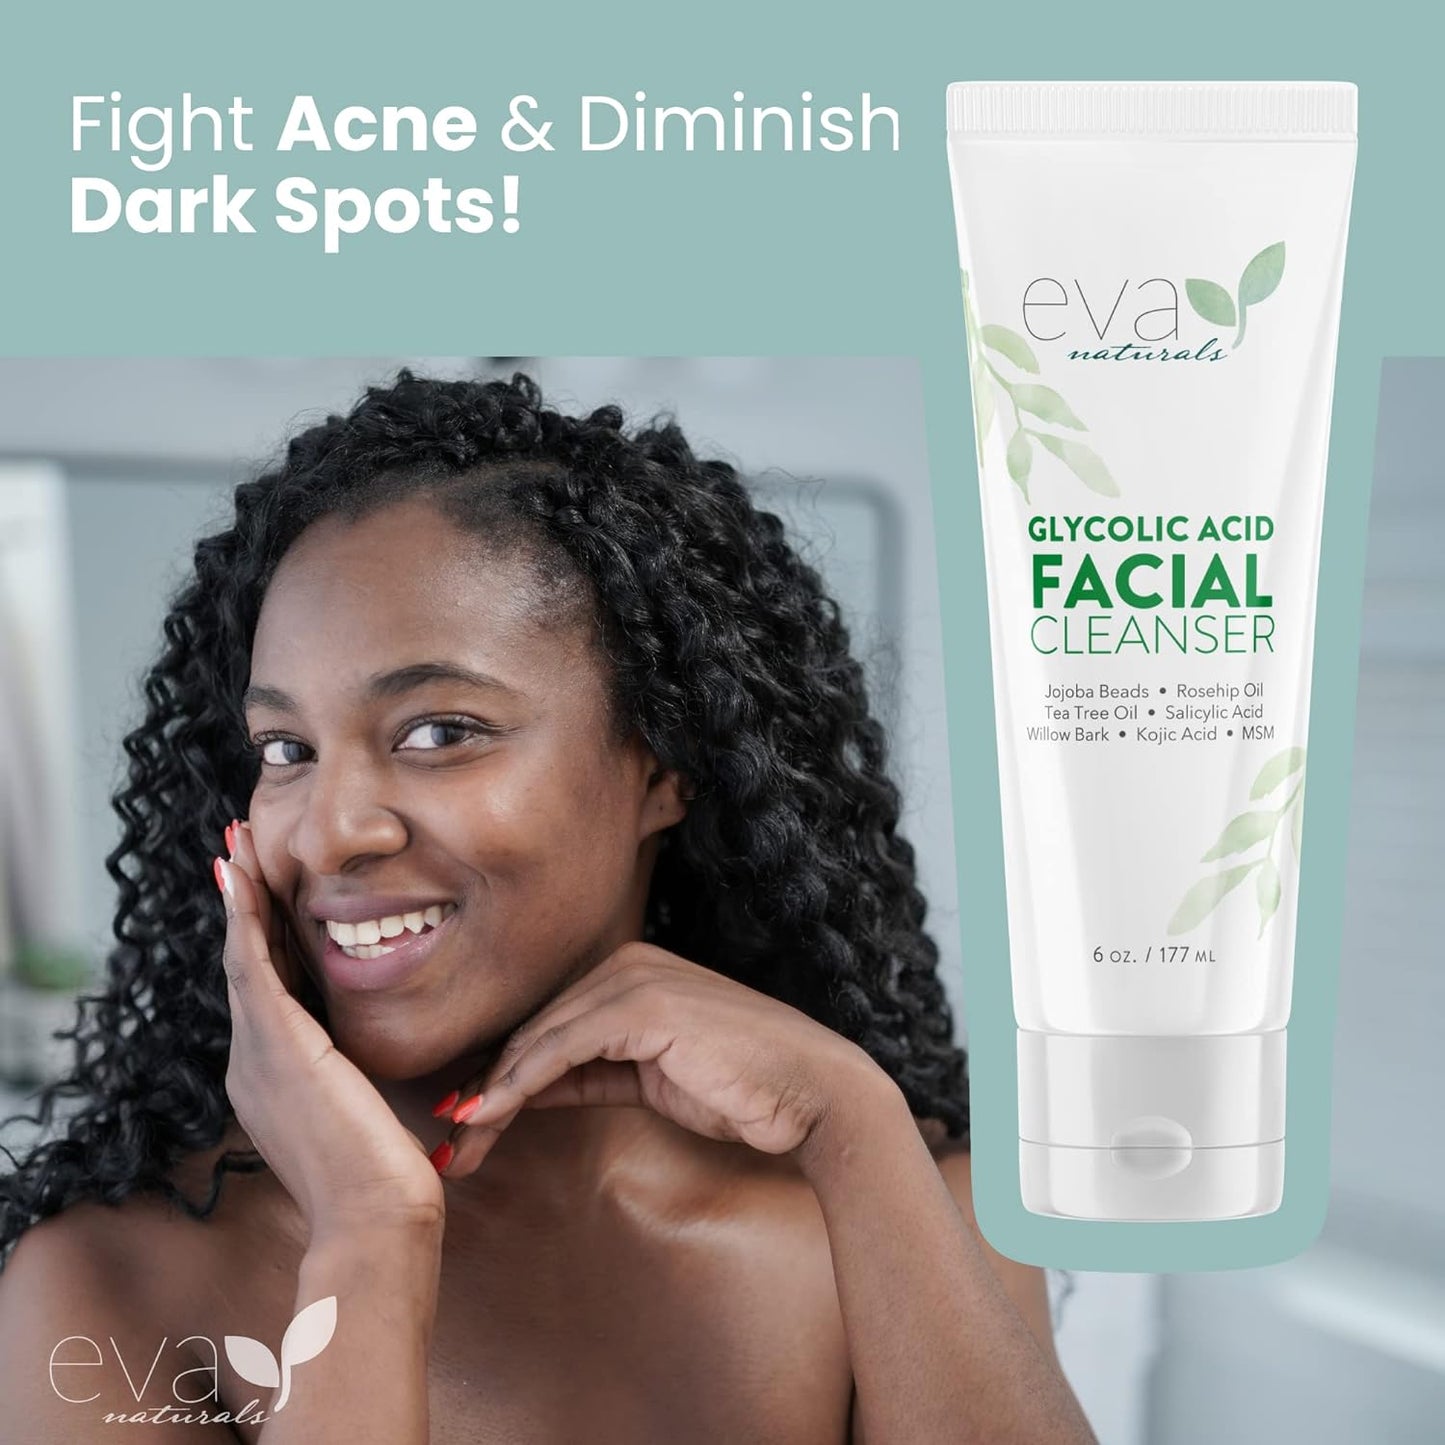 Eva Naturals Anti Aging, Glycolic Acid Facial Cleanser.